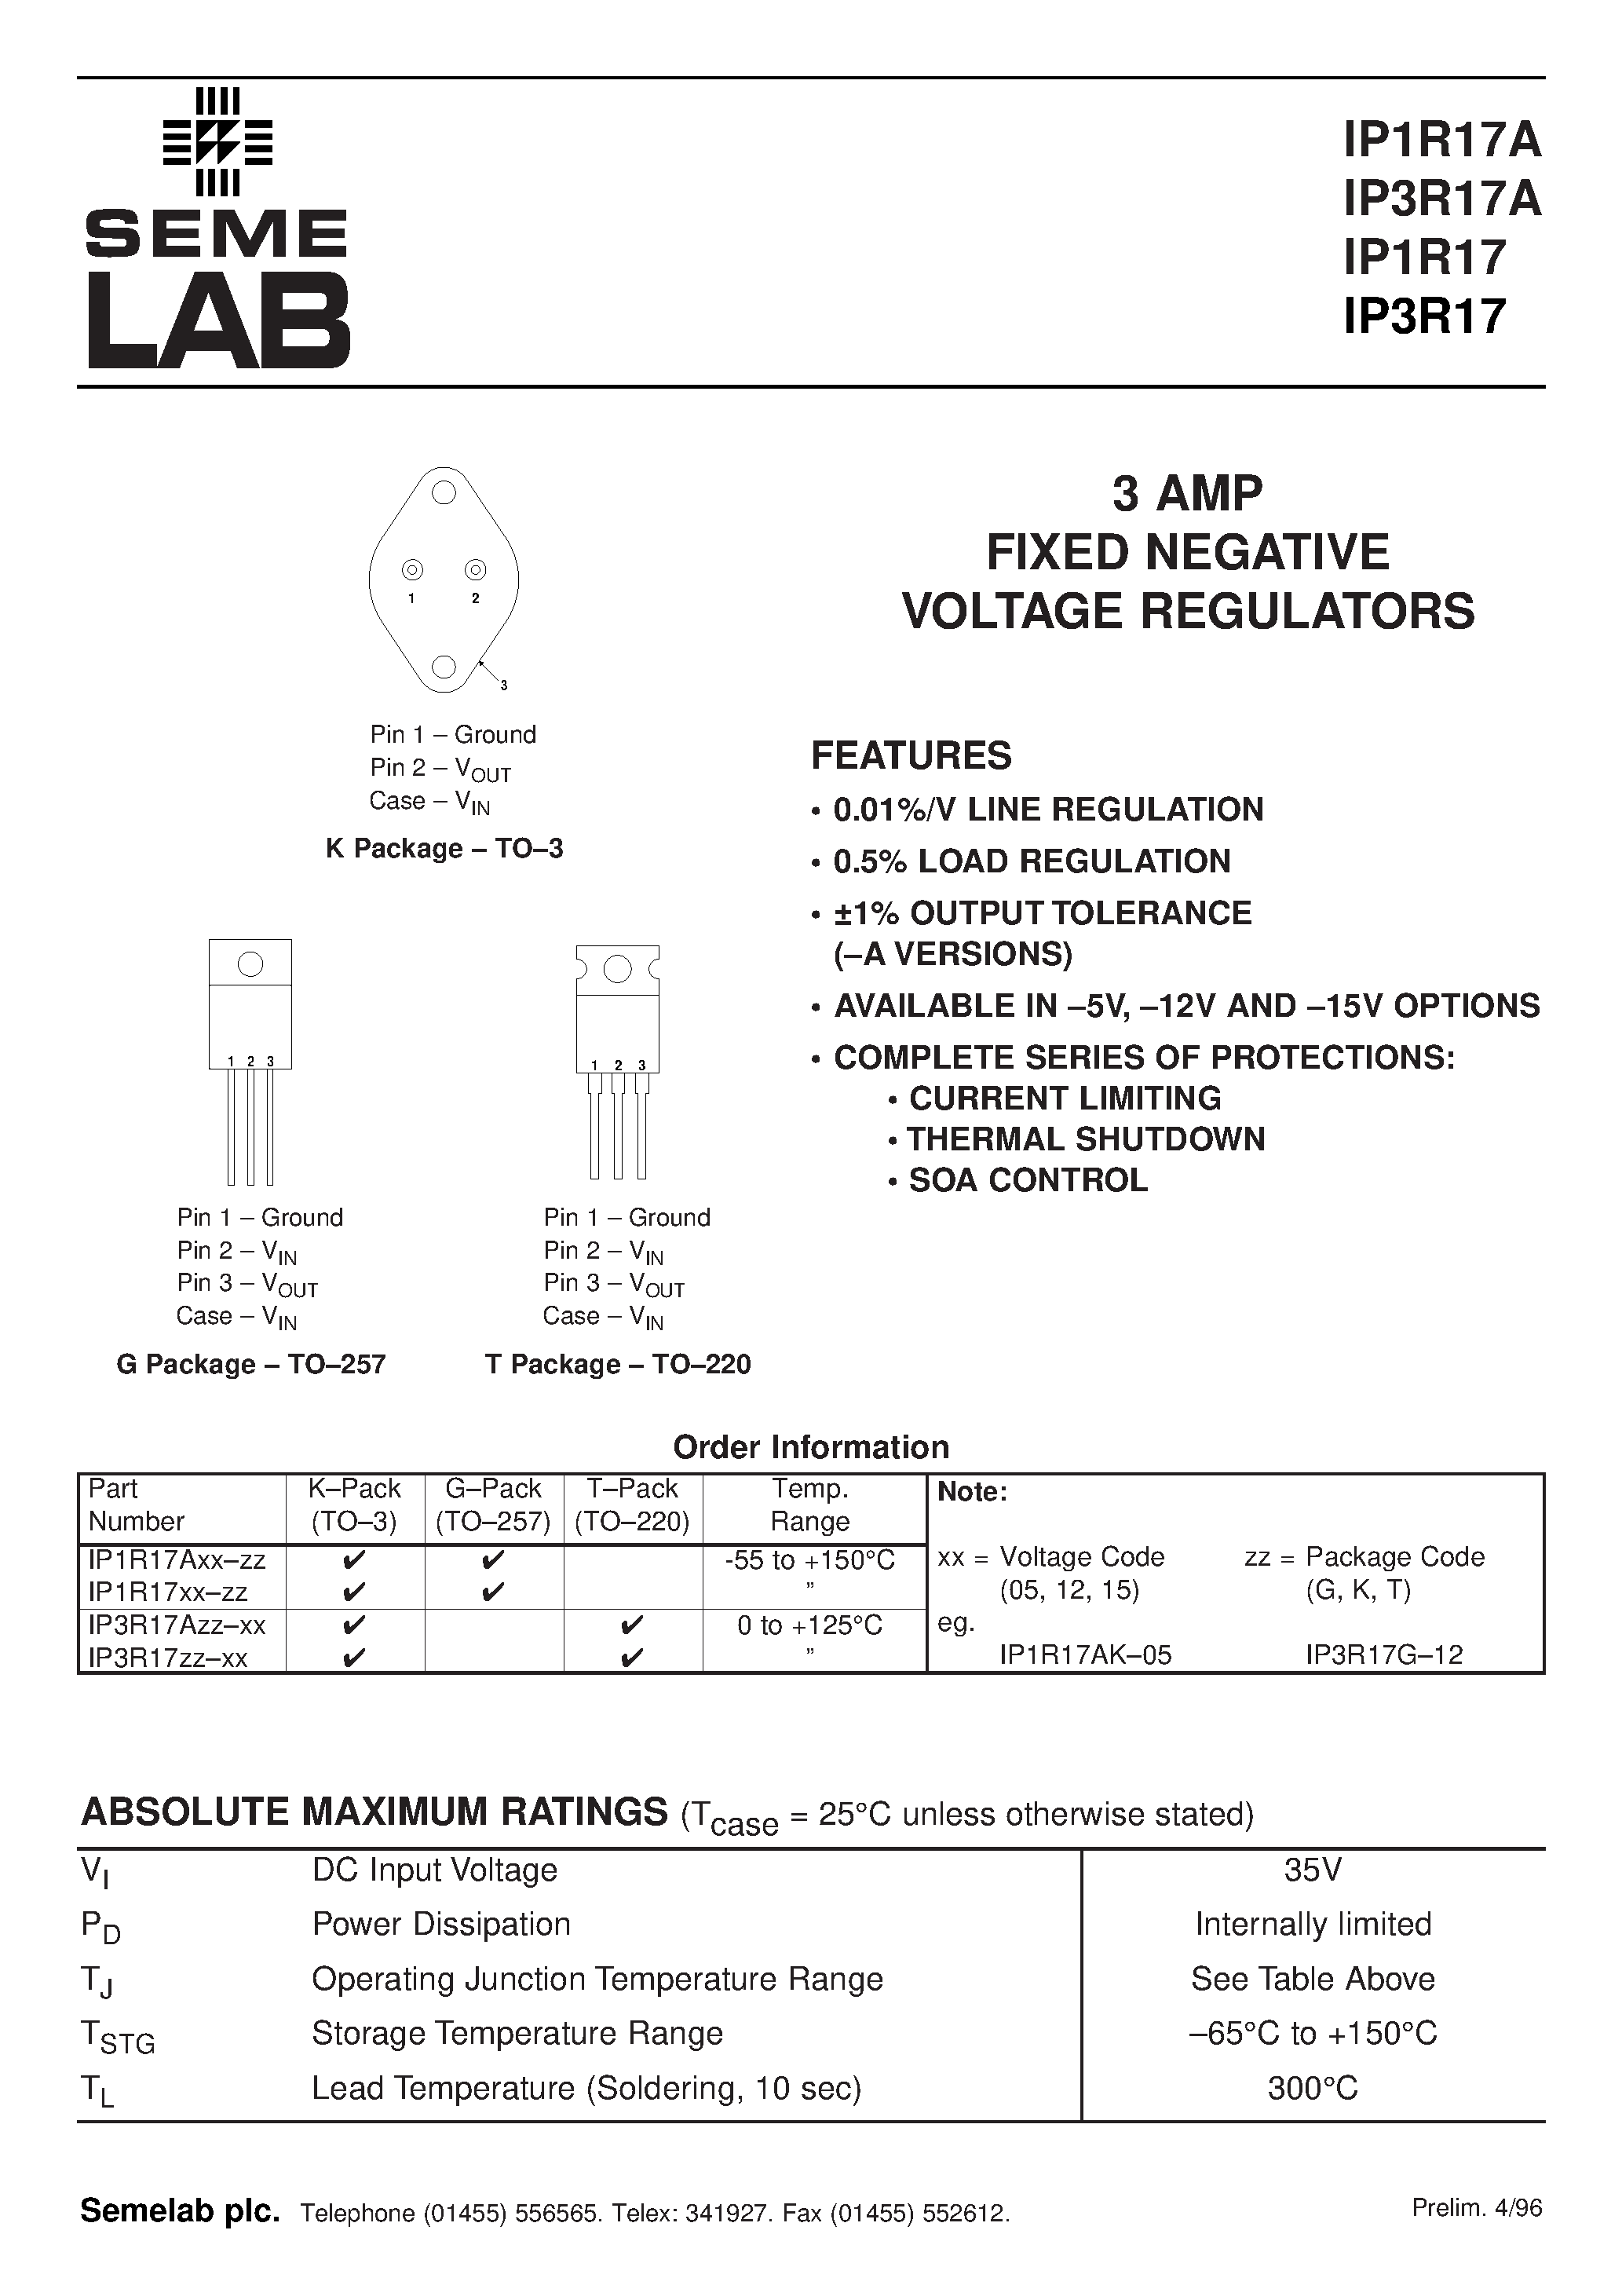 Datasheet IP1R17A12-K - 3 AMP FIXED NEGATIVE VOLTAGE REGULATORS page 1